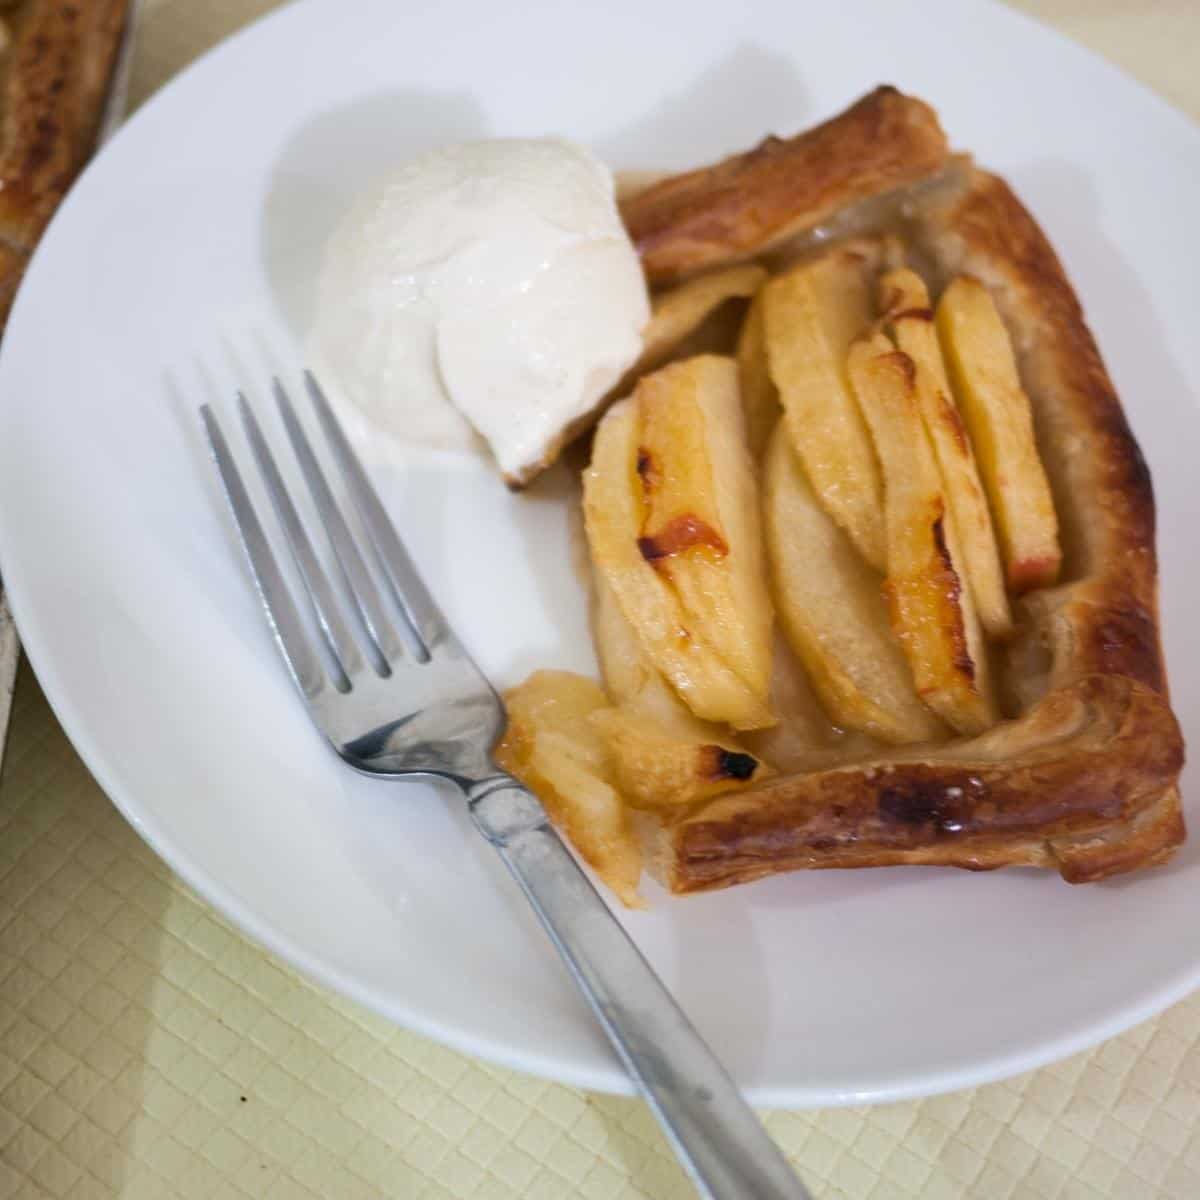 A piece of apple tart with ice cream.